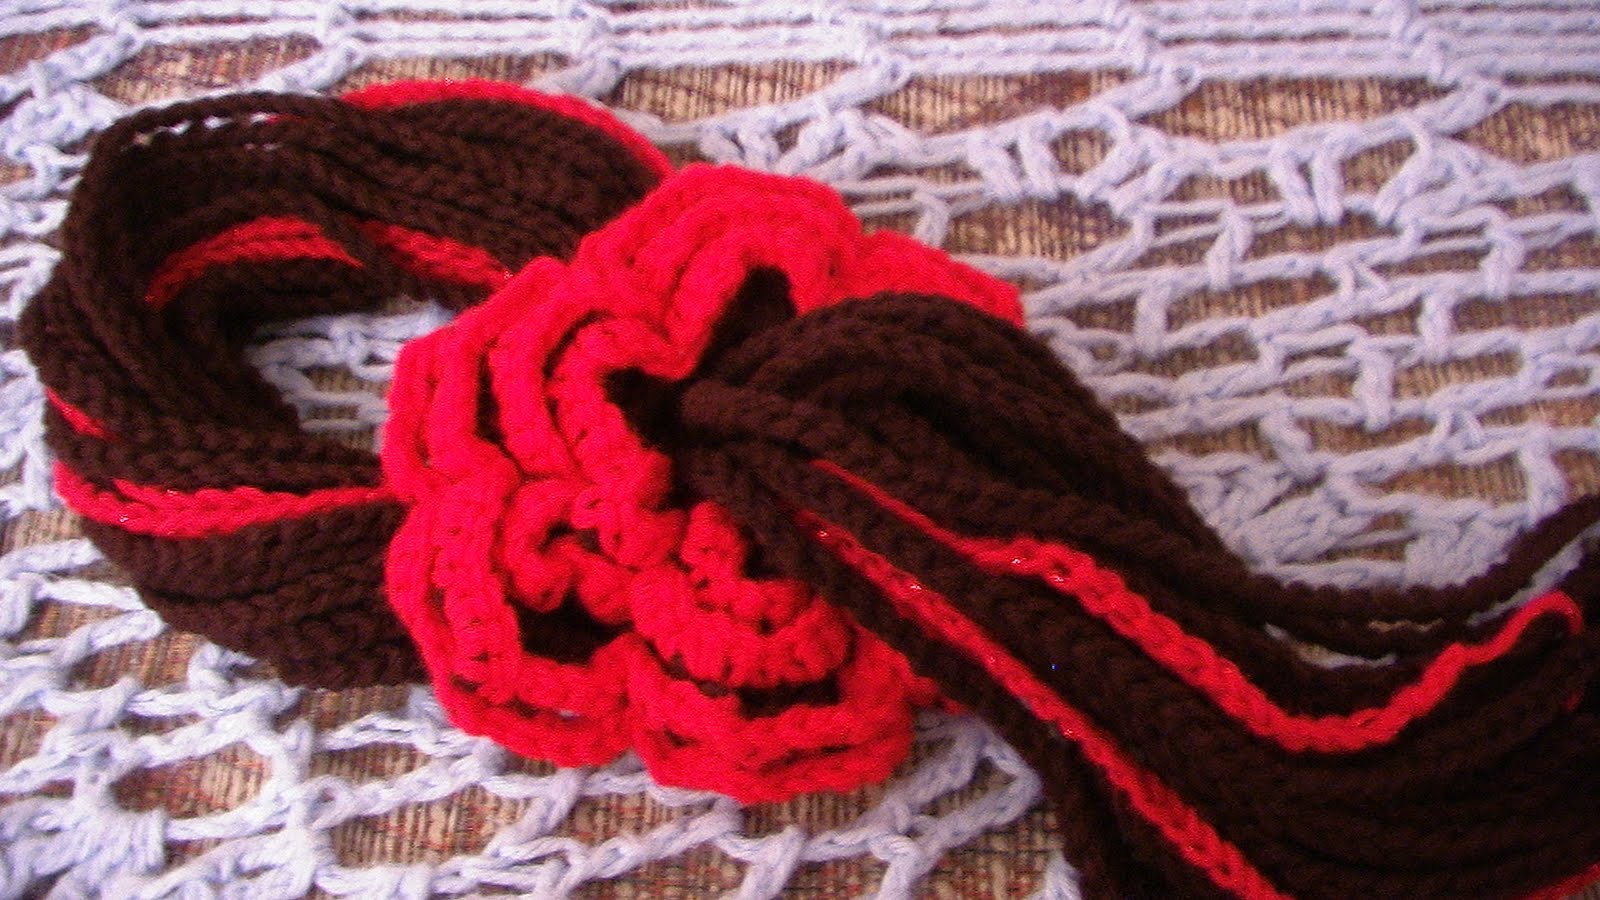 http://4.bp.blogspot.com/-afWVAxfEY3k/TlWbMA1hN_I/AAAAAAAABms/P3RP_kZ36JE/s1600/red+and+black+scarf.JPG